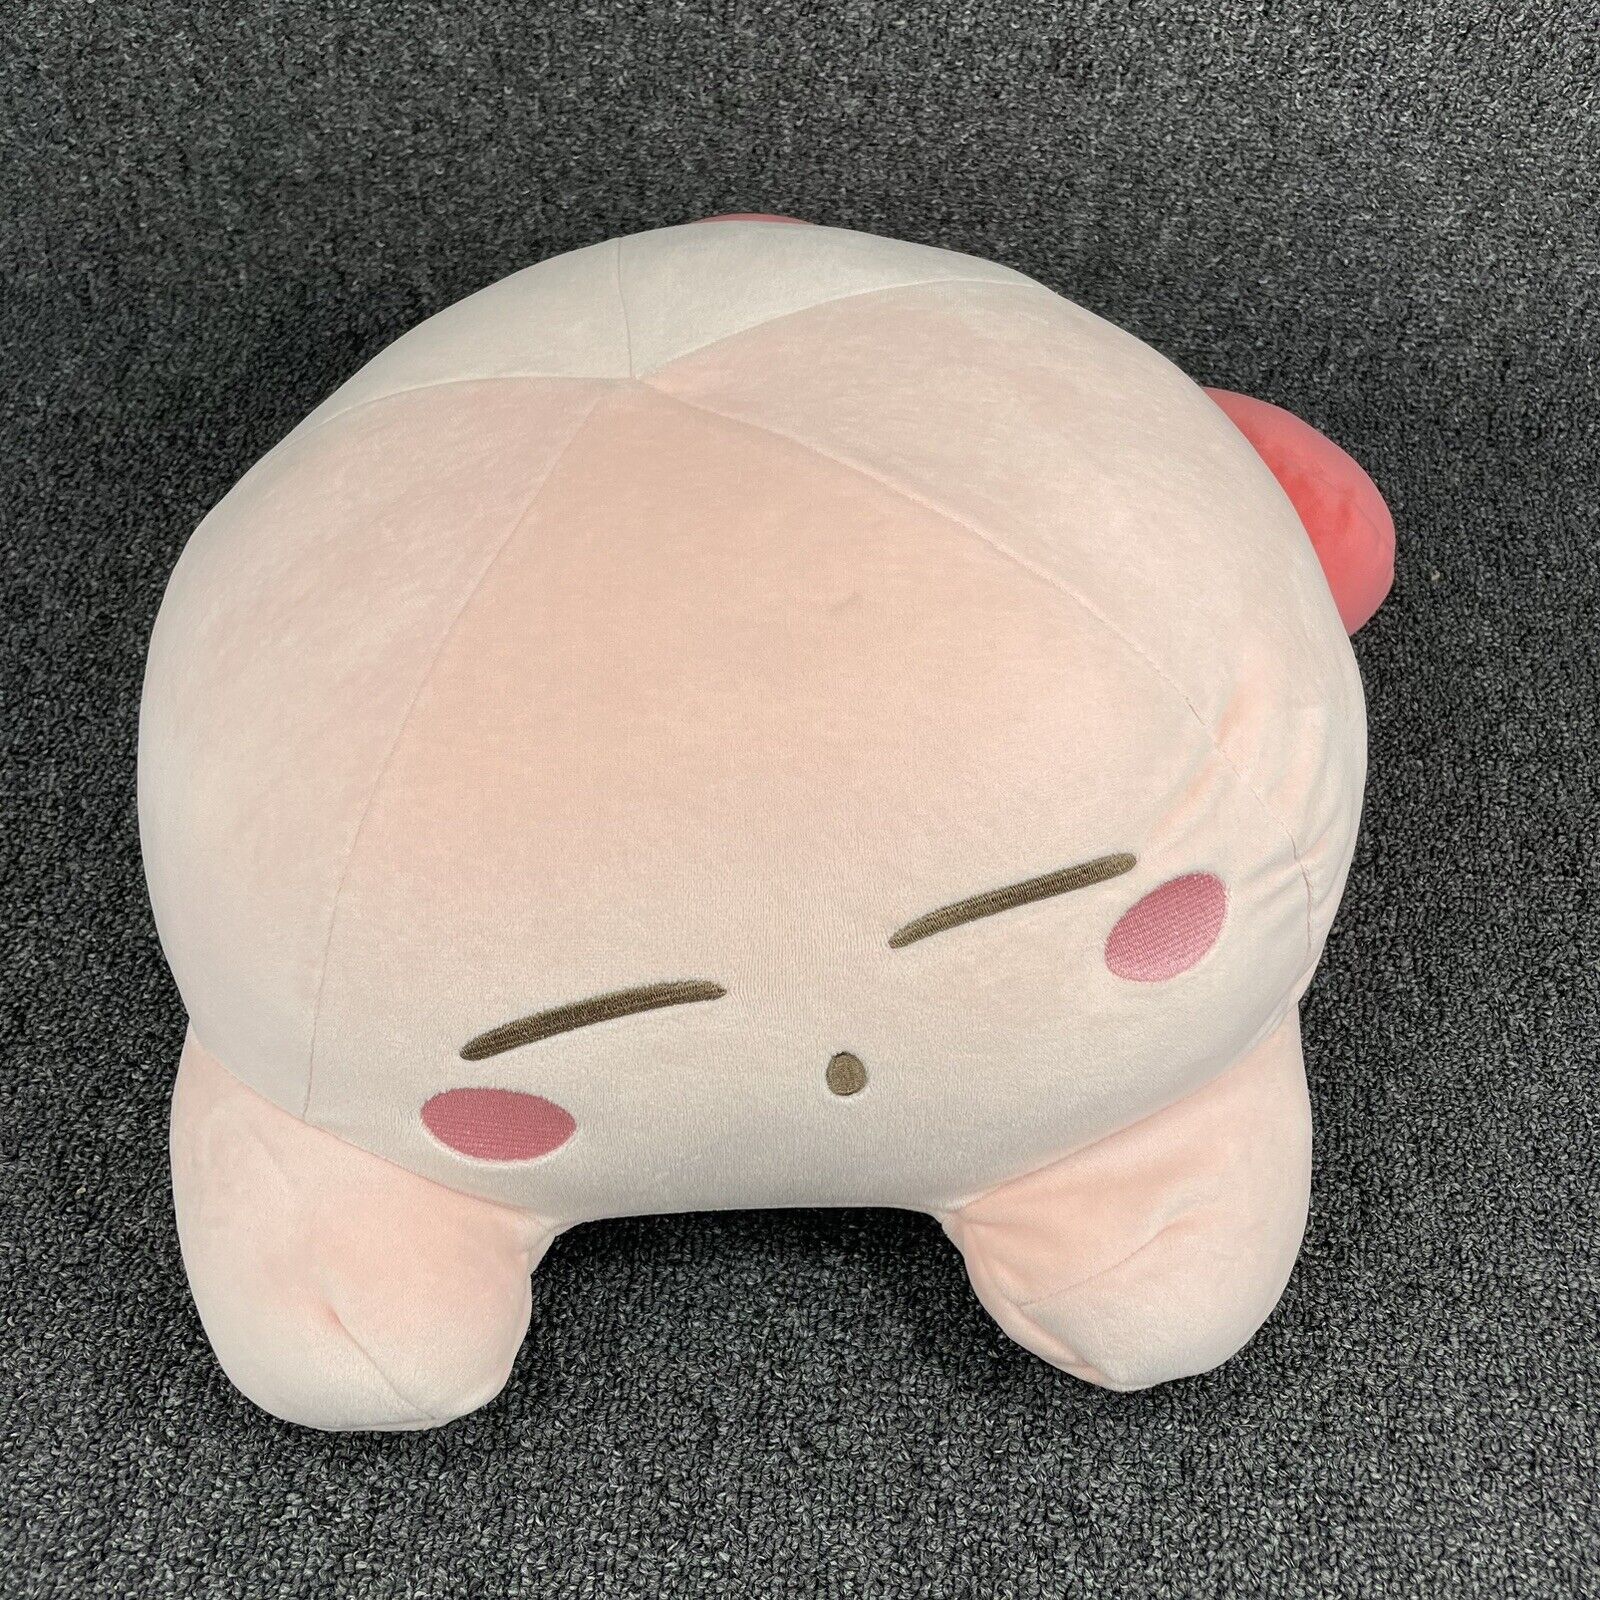 Takara Tomy Sleepy Kirby Pink Soft Plush Toy Club Mocchi-Mocchi 18” Large